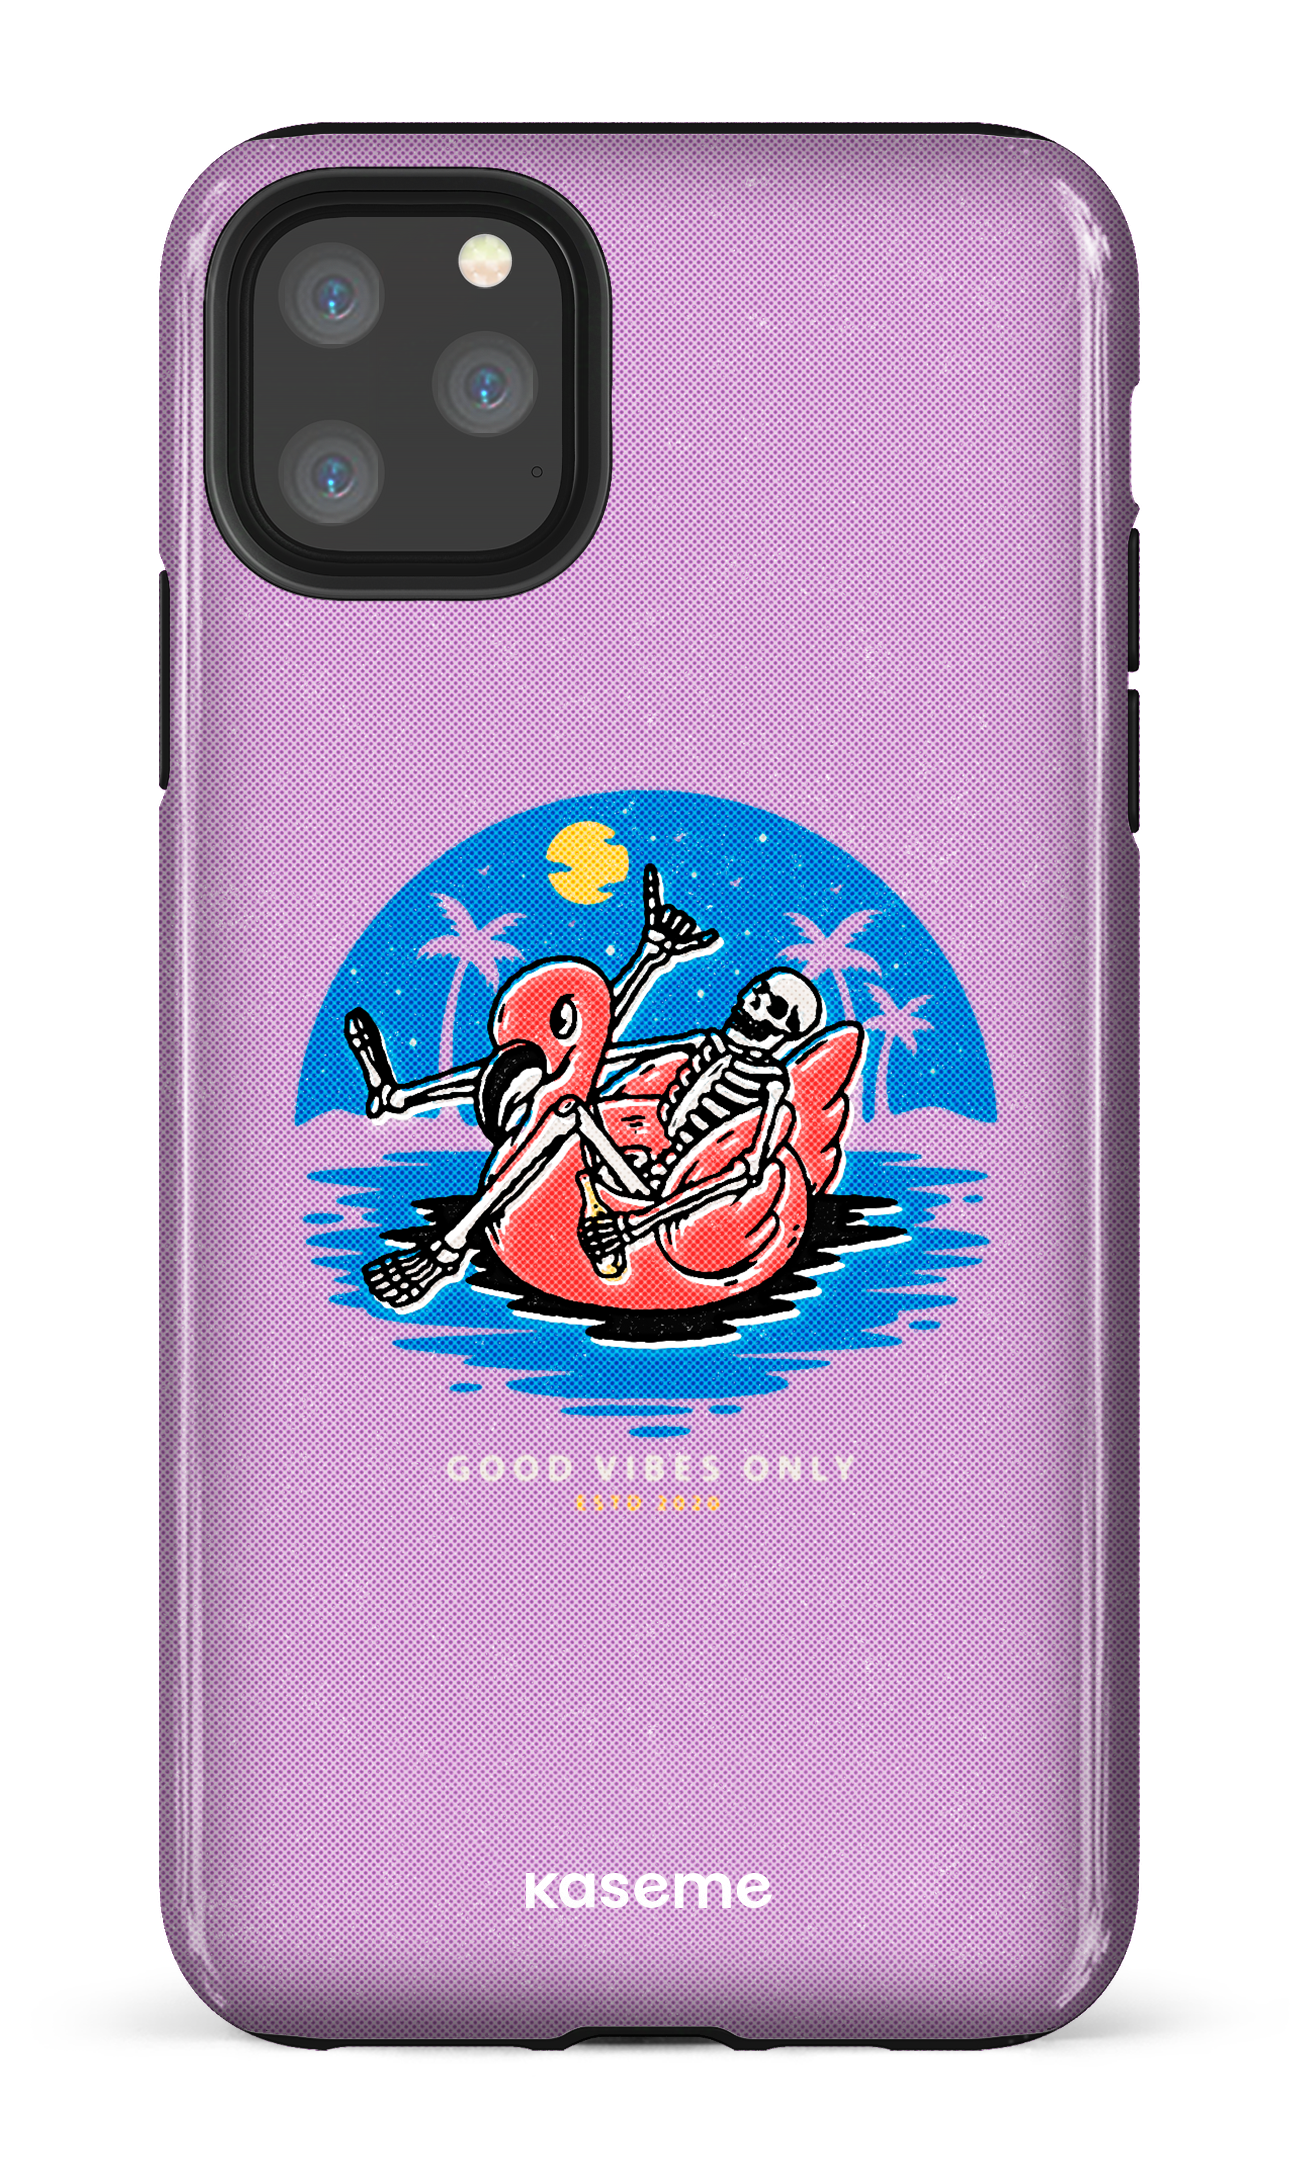 Seaside purple - iPhone 11 Pro Max